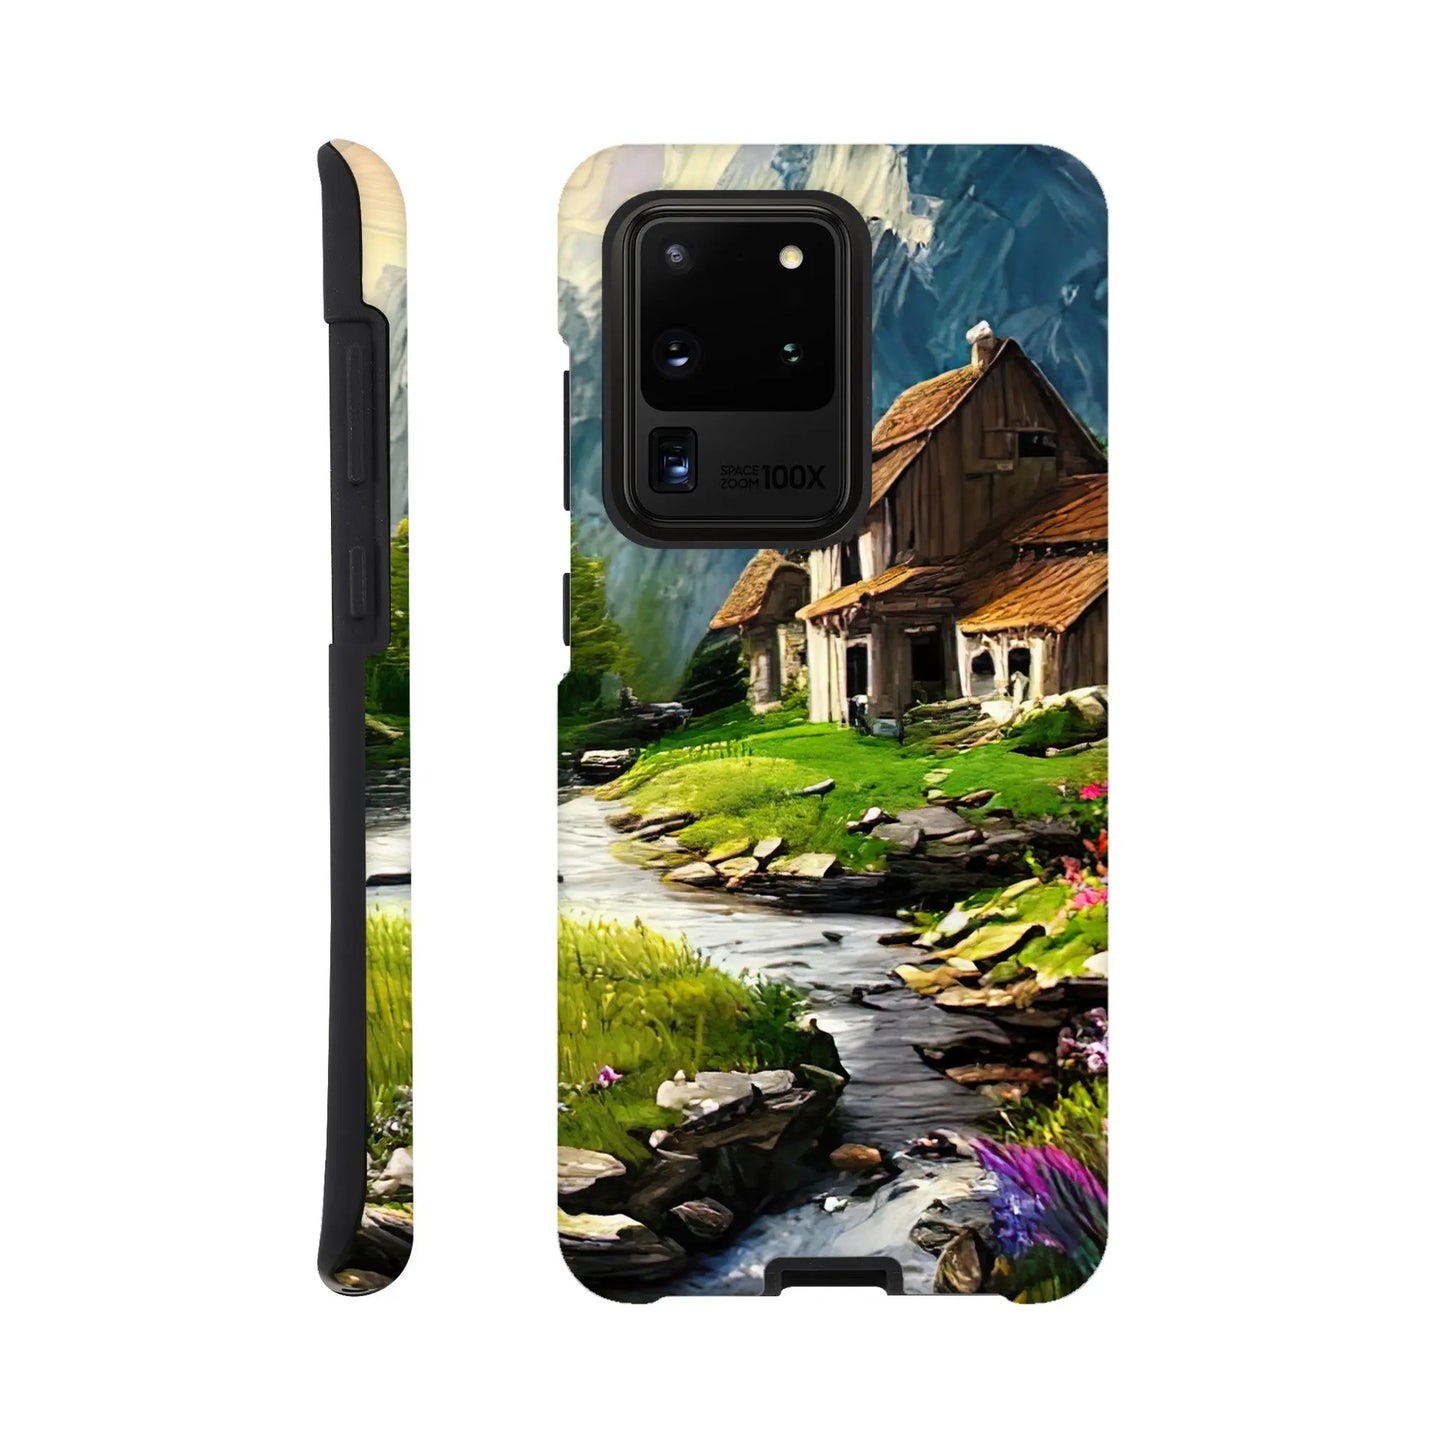 Smartphone-Hülle "Hart" - Berglandschaft - Malerischer Stil, KI-Kunst RolConArt, Landschaften, Galaxy-S20-Ultra